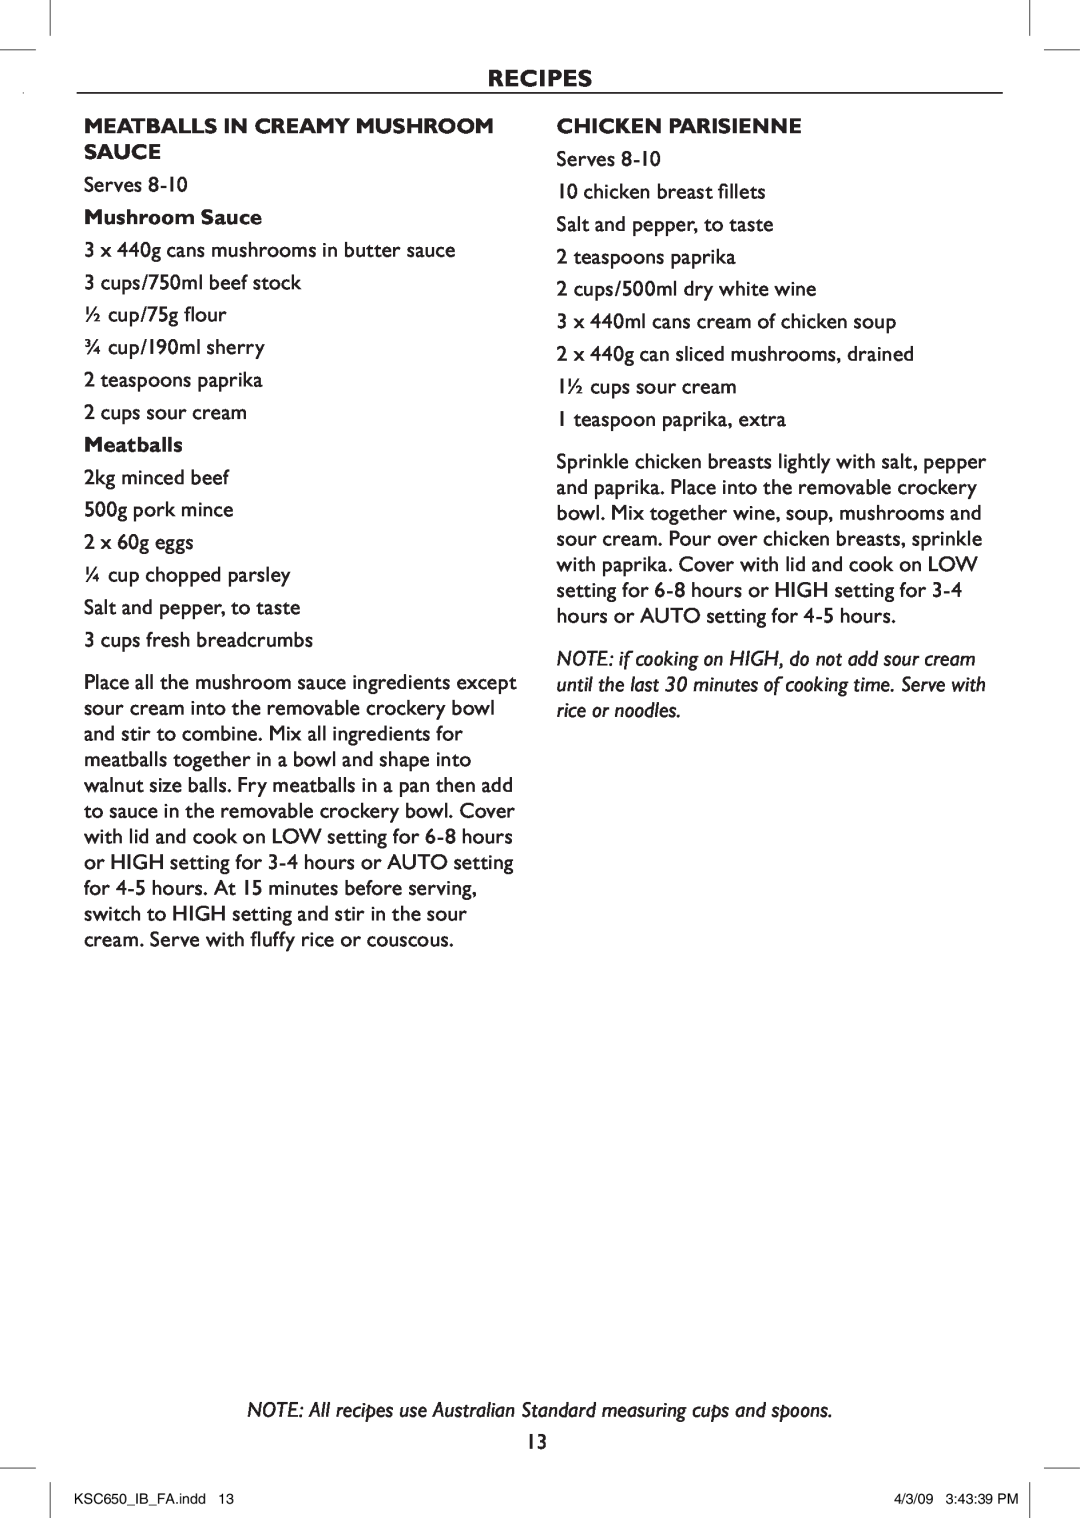 Kambrook KSC650 manual Recipes, Meatballs In Creamy Mushroom Sauce, Chicken Parisienne 